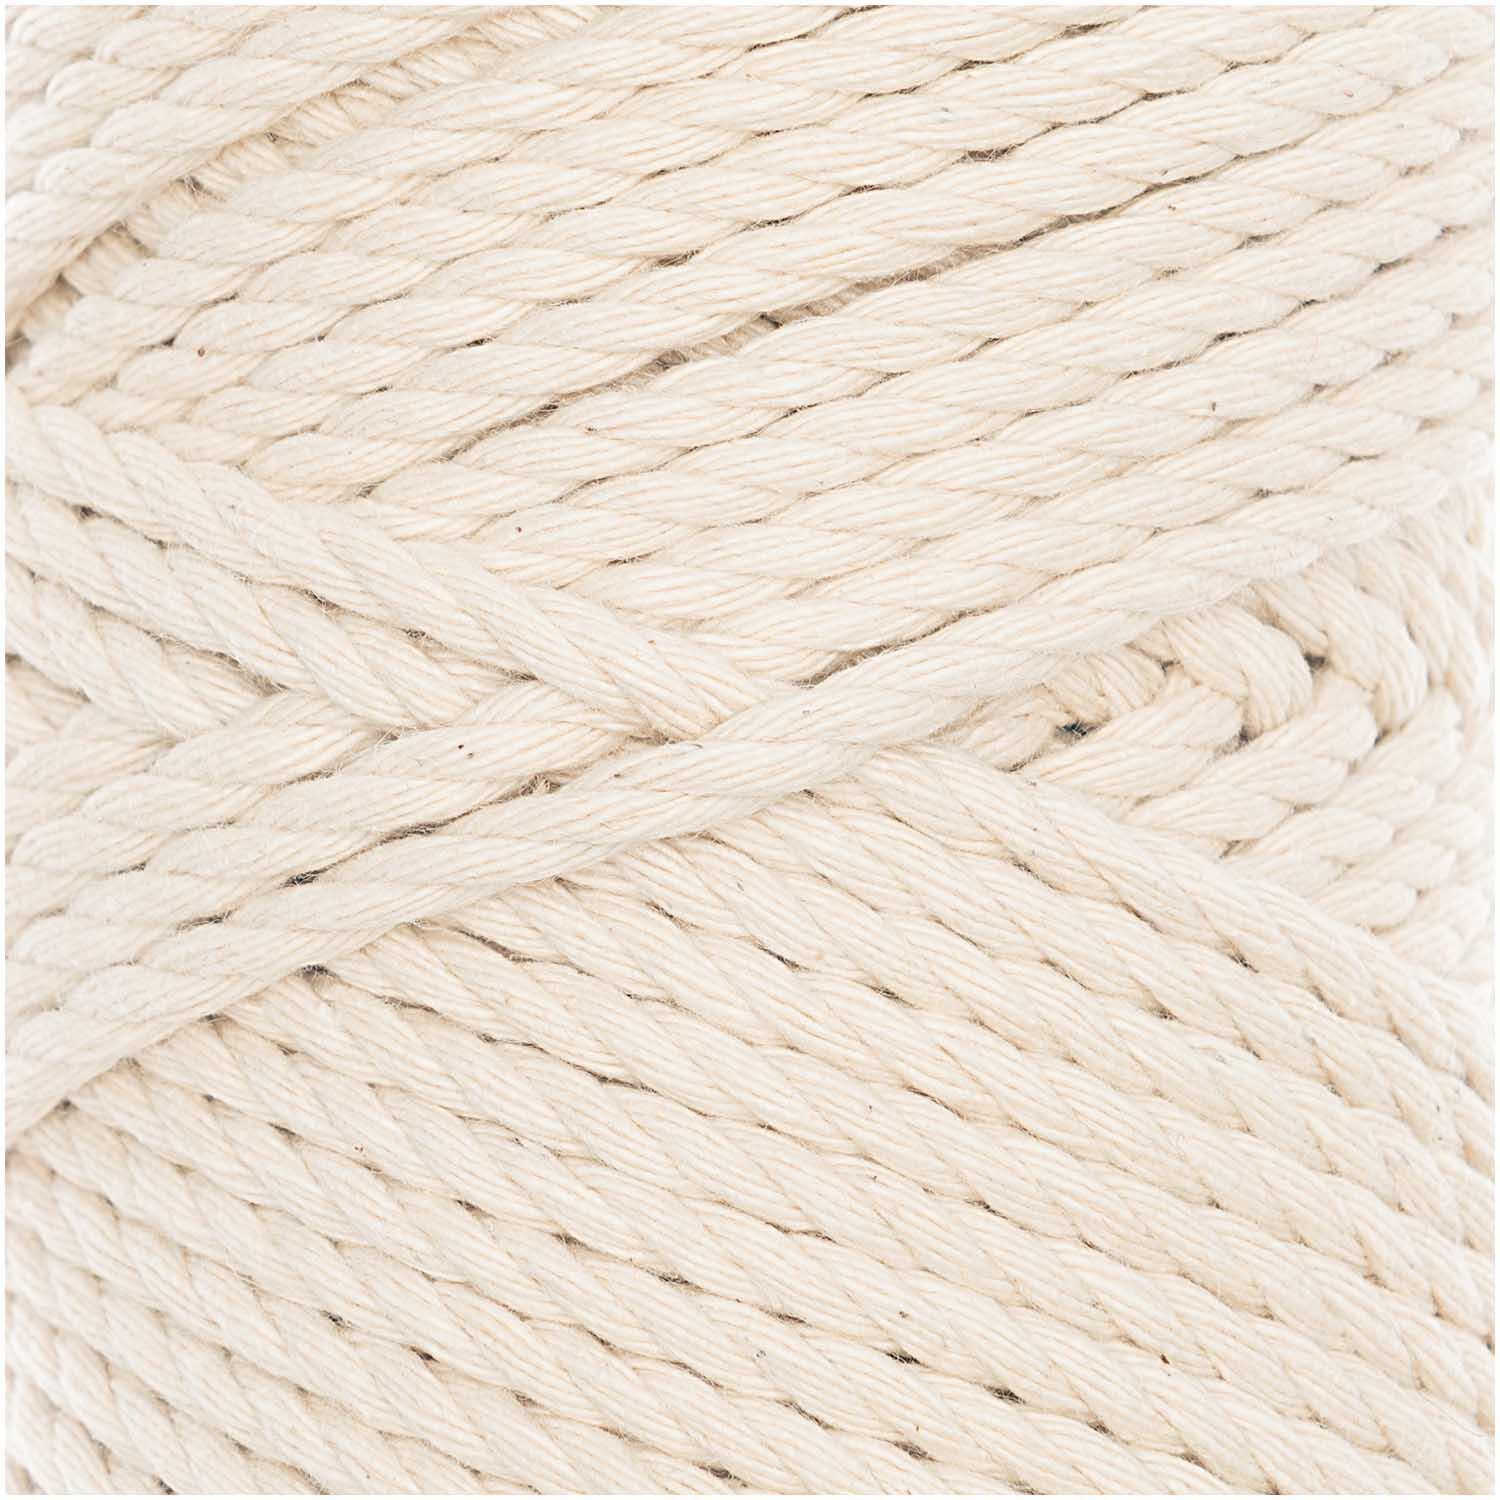 Creative Cotton Cord Skinny - 190g Makrameegarn aus Baumwolle Farbe 001 Creme